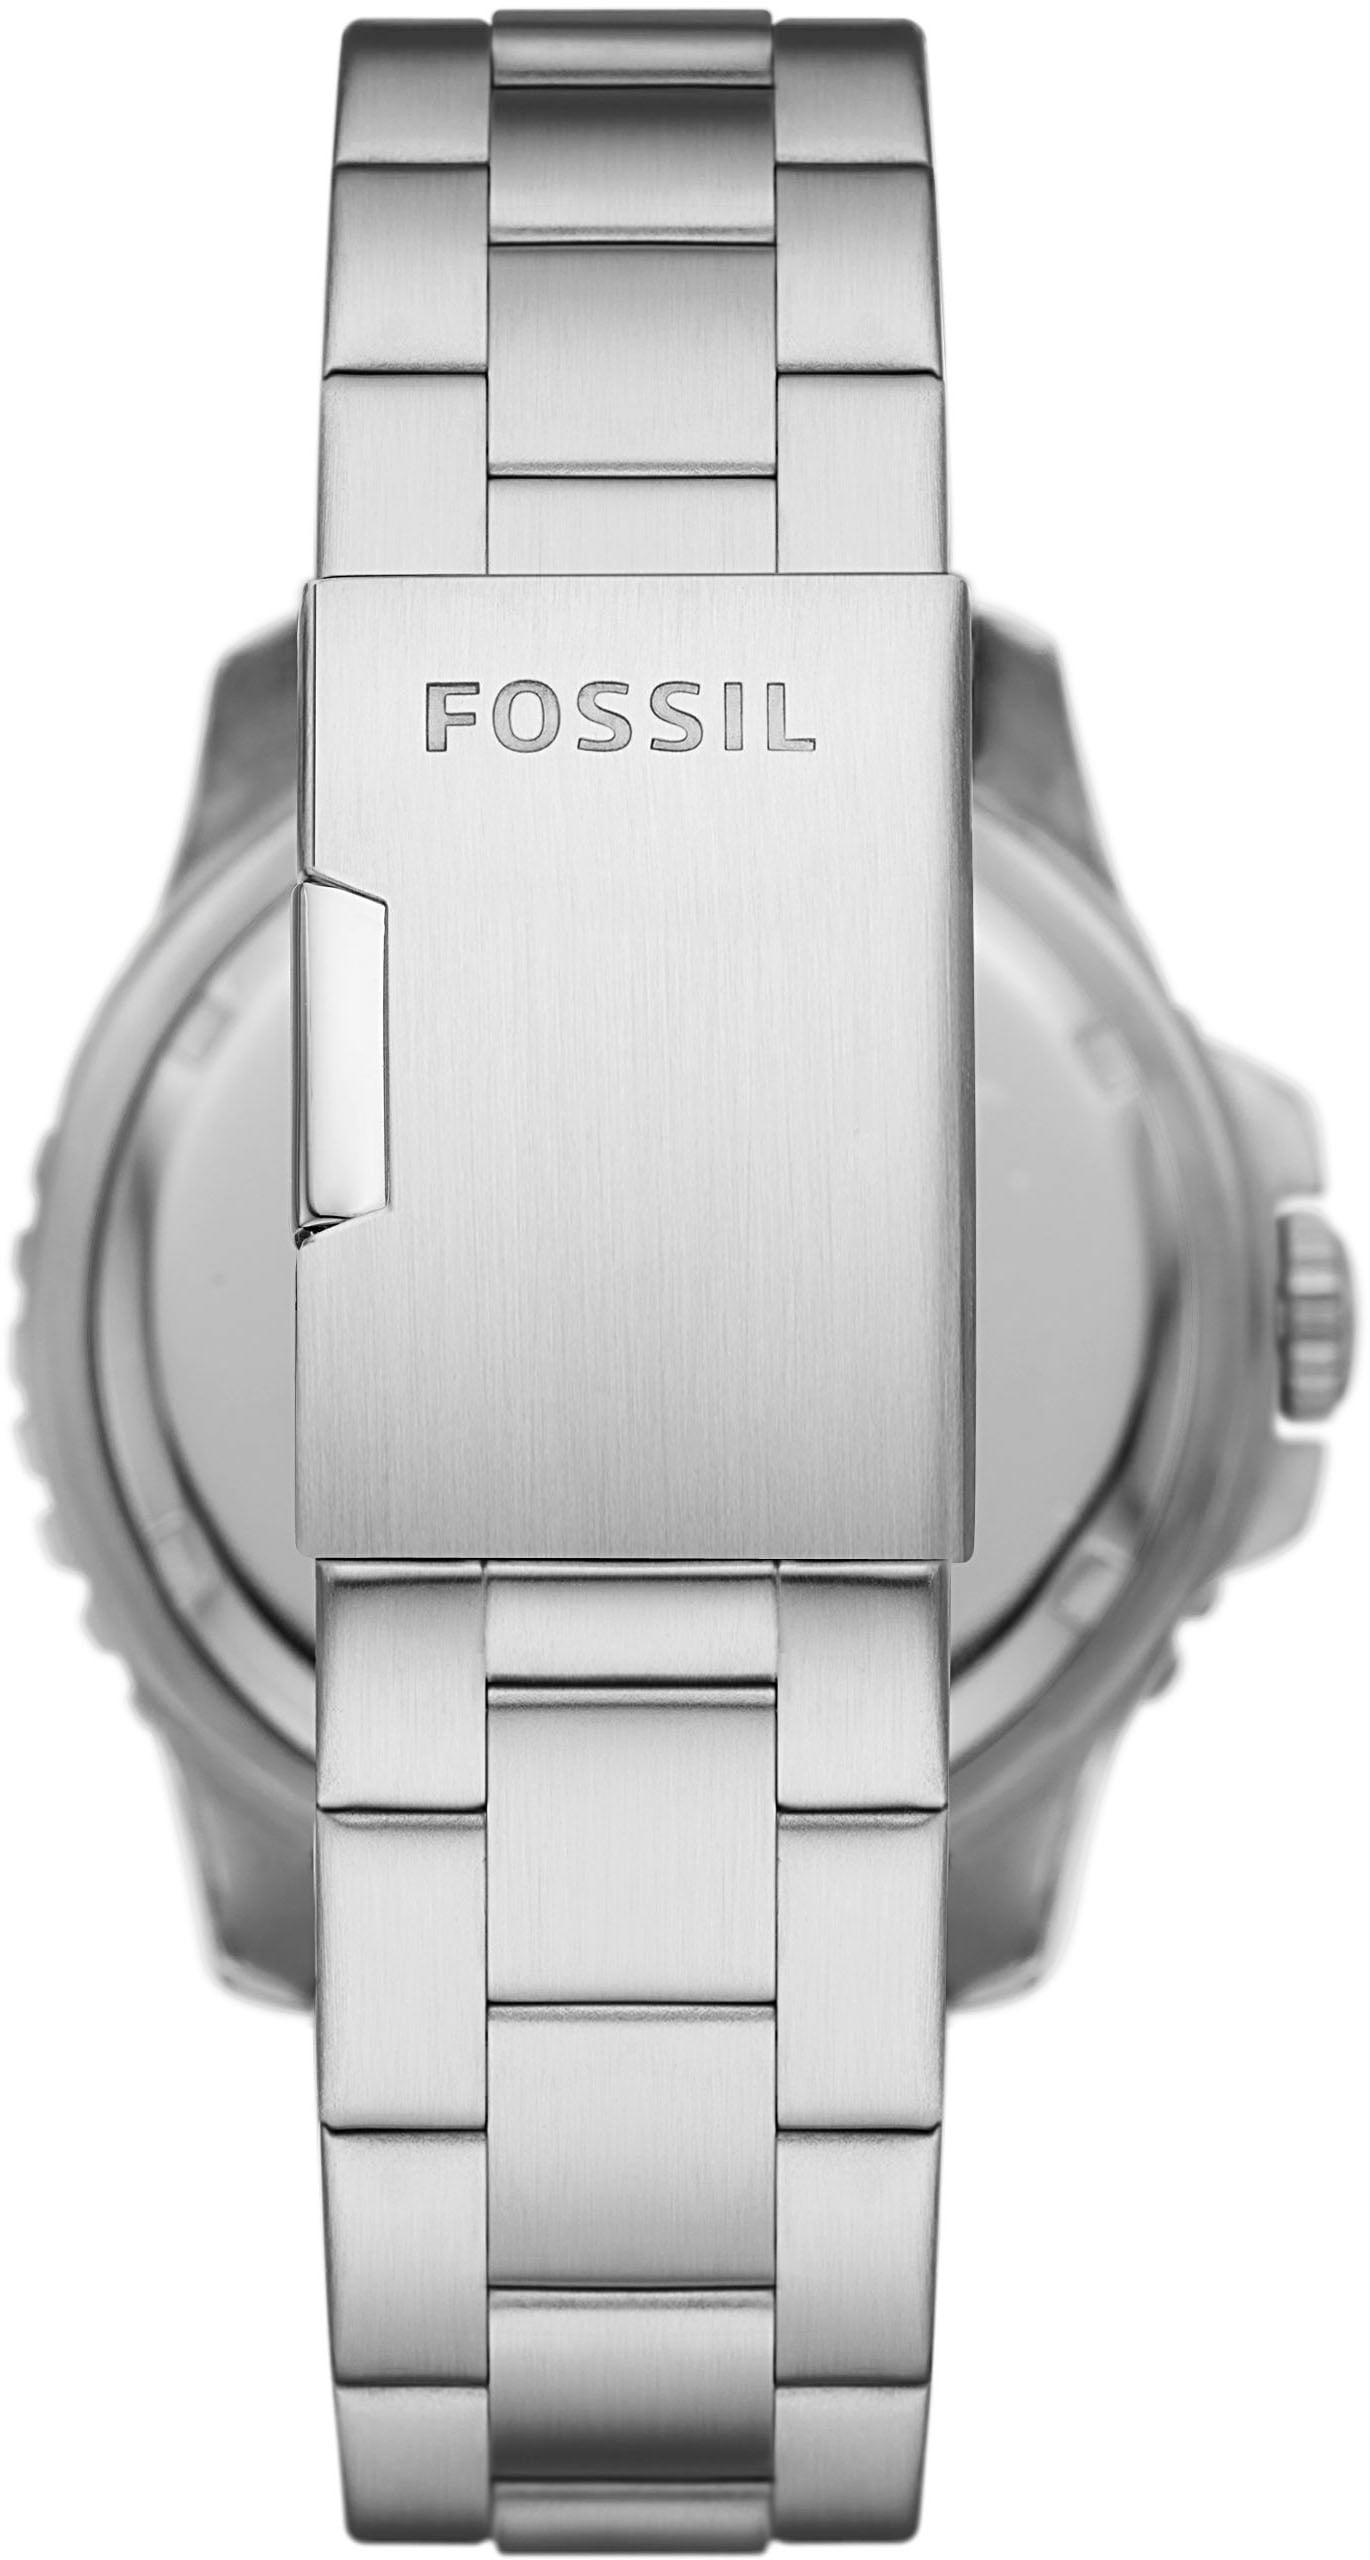 Fossil Quarzuhr »FOSSIL BLUE GMT, FS5991«, Armbanduhr, Herrenuhr, Datum, analog